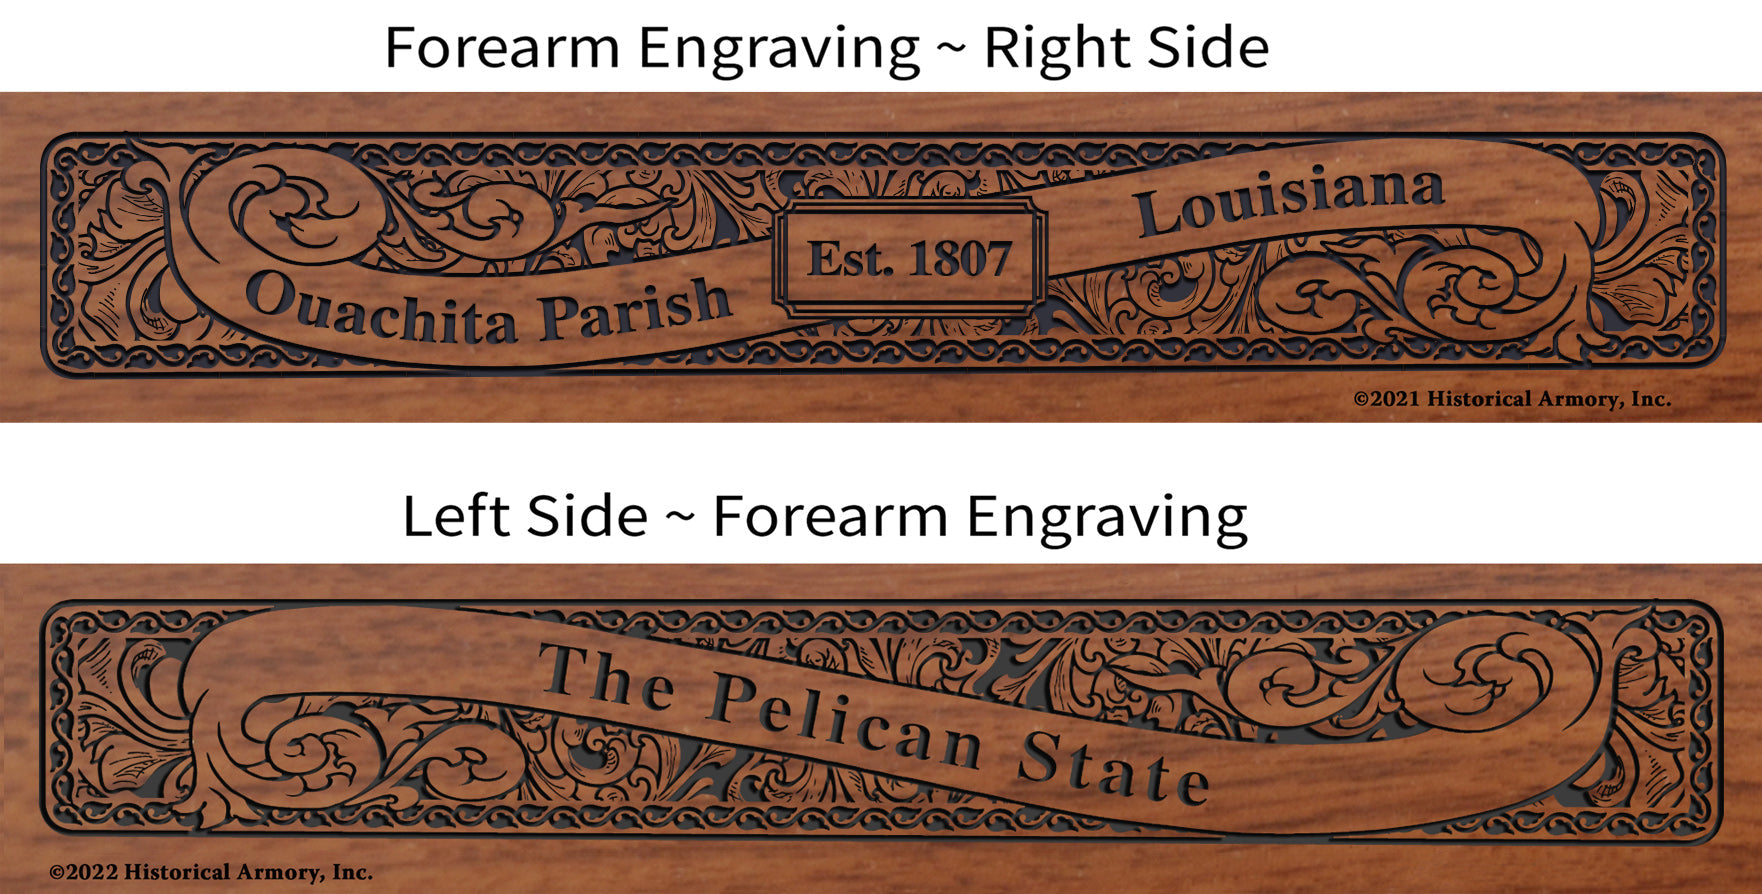 Ouachita Parish Louisiana Engraved Rifle Forearm Right-Side